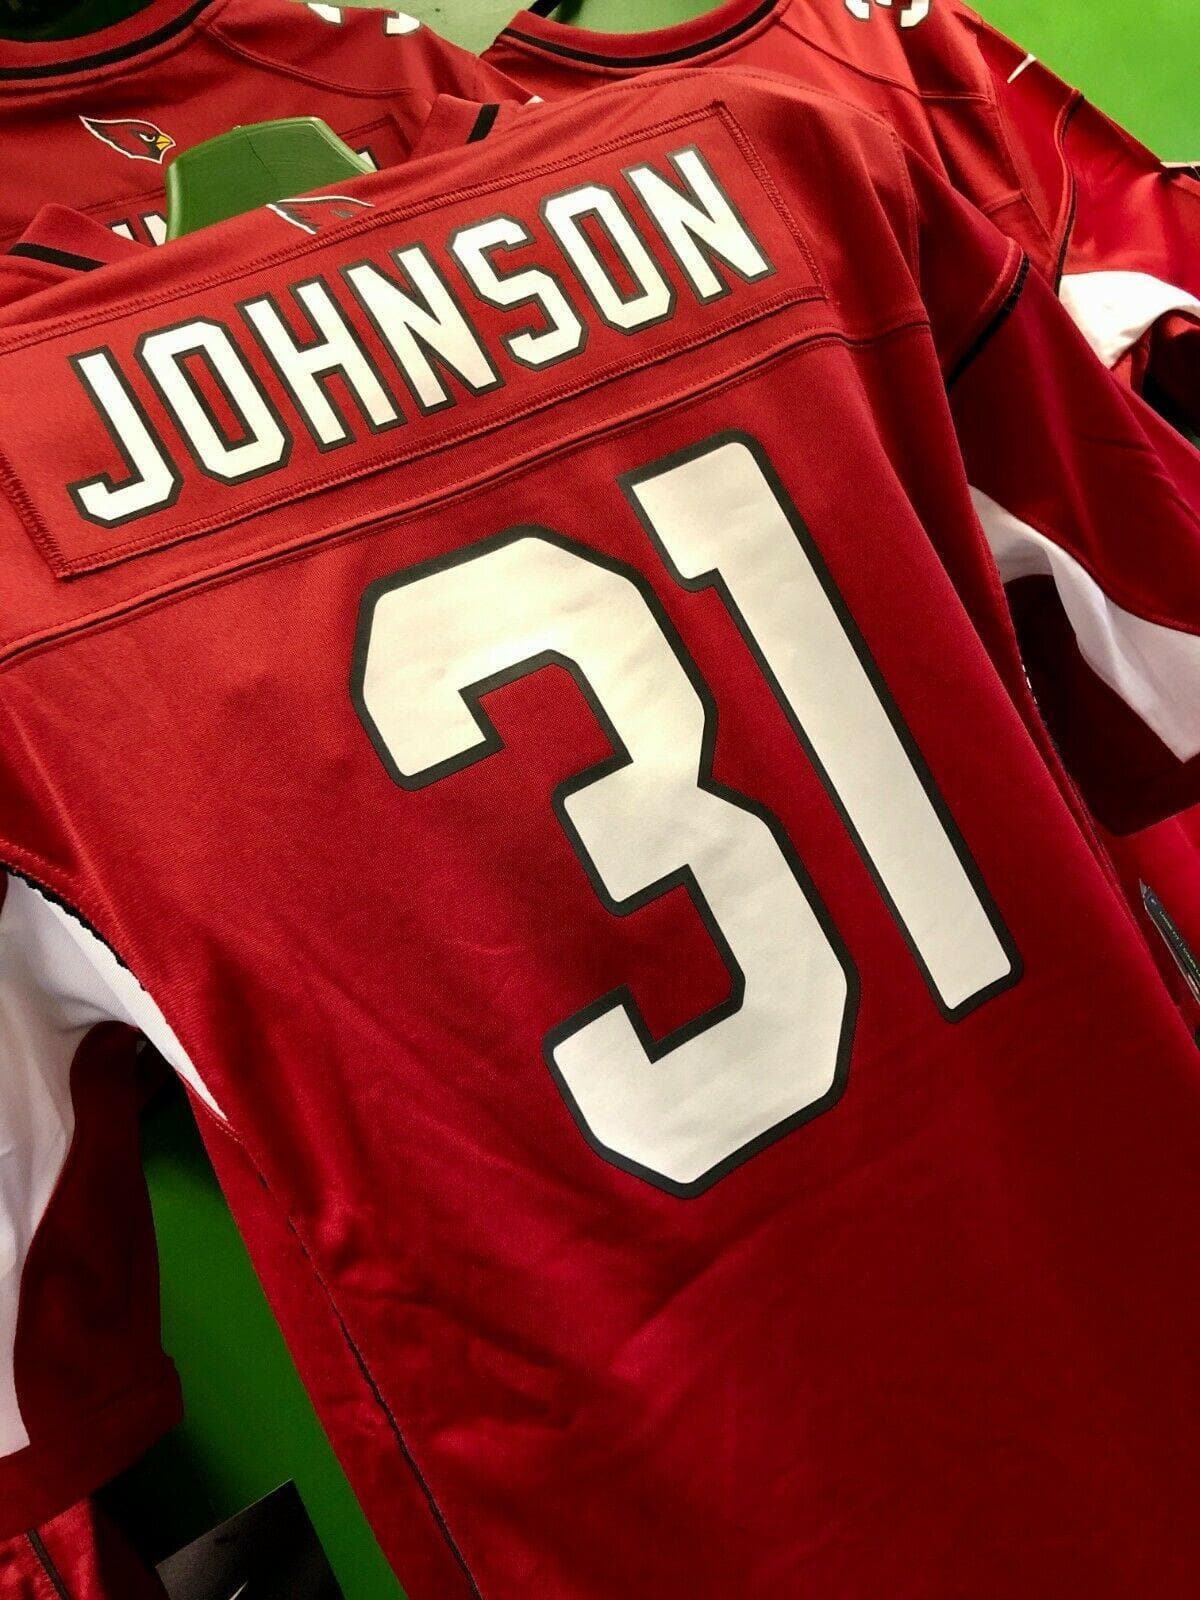 NFL Arizona Cardinals Johnson #31 Game Jersey Men's XXXL 3X-Large NWT